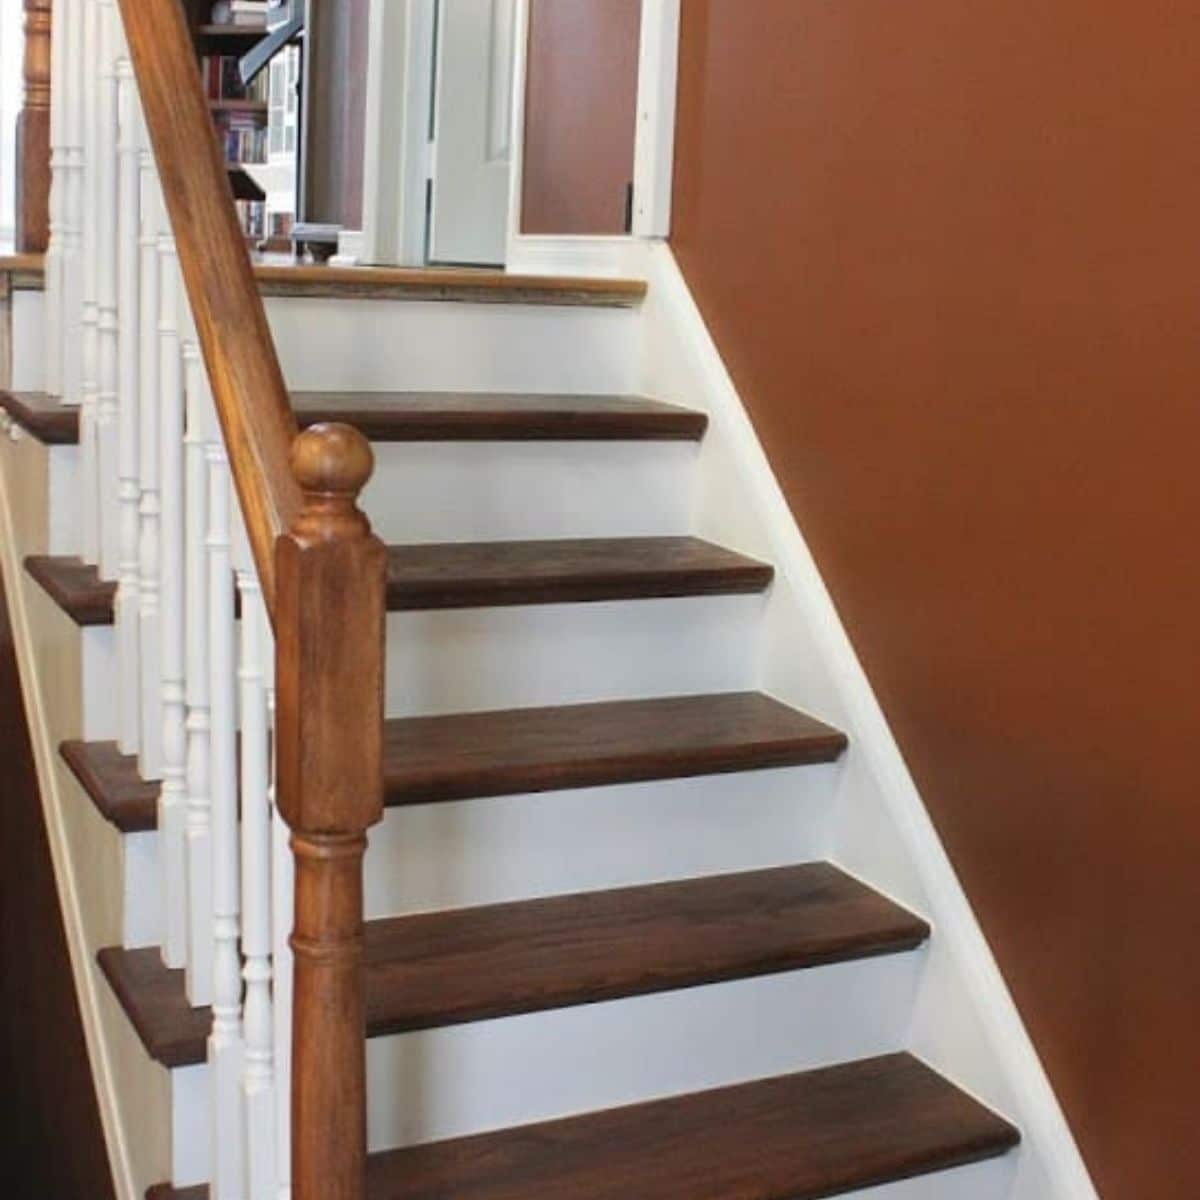 Wooden stairway with railings